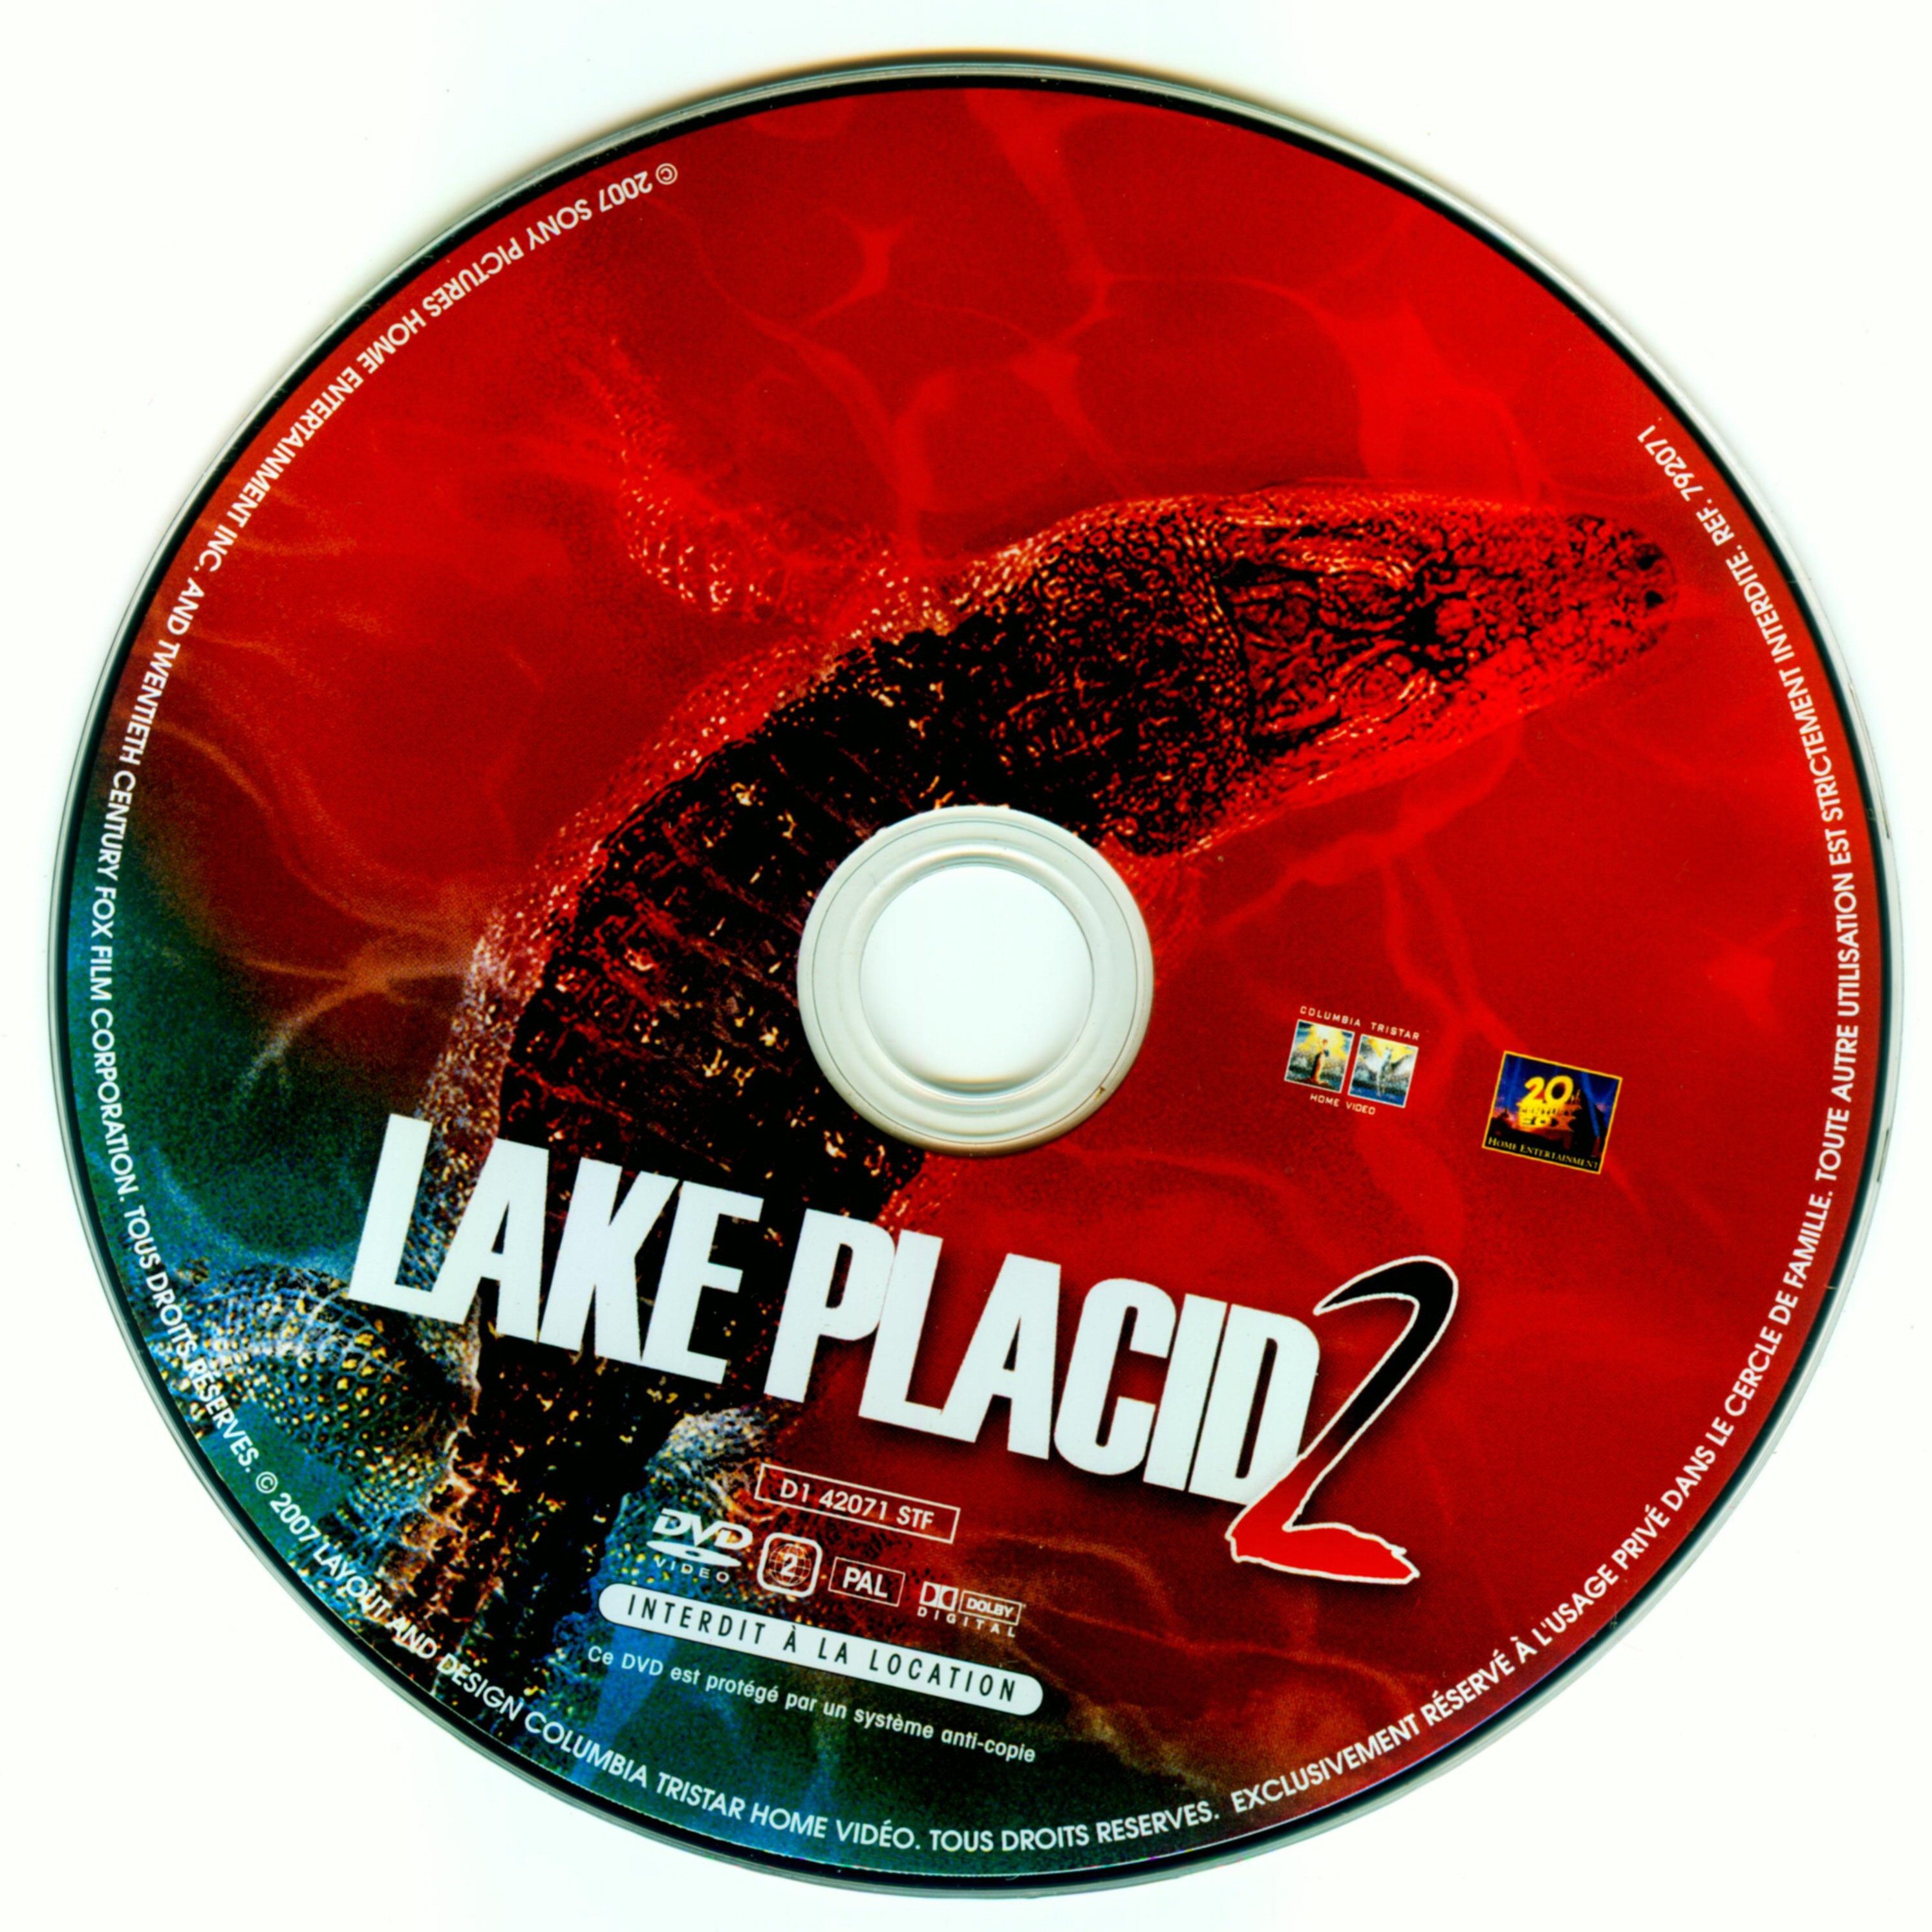 Lake placid 2